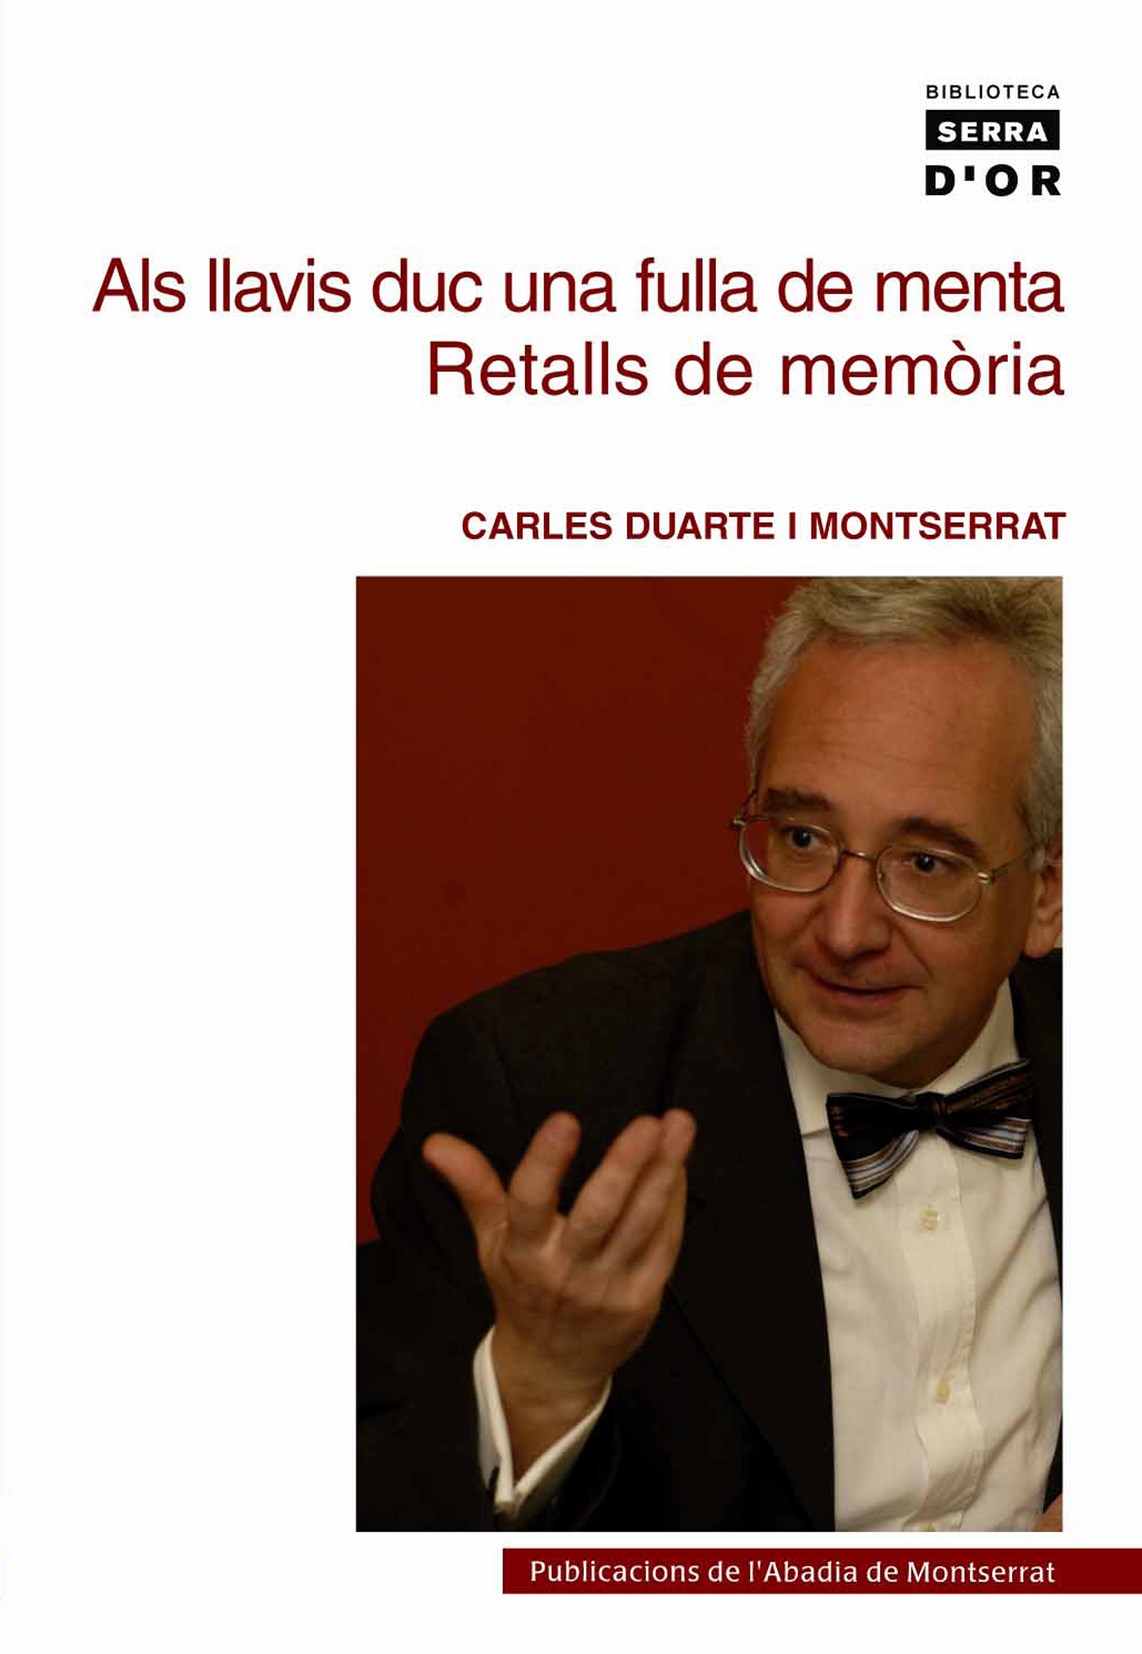 Carles Duarte i Montserrat